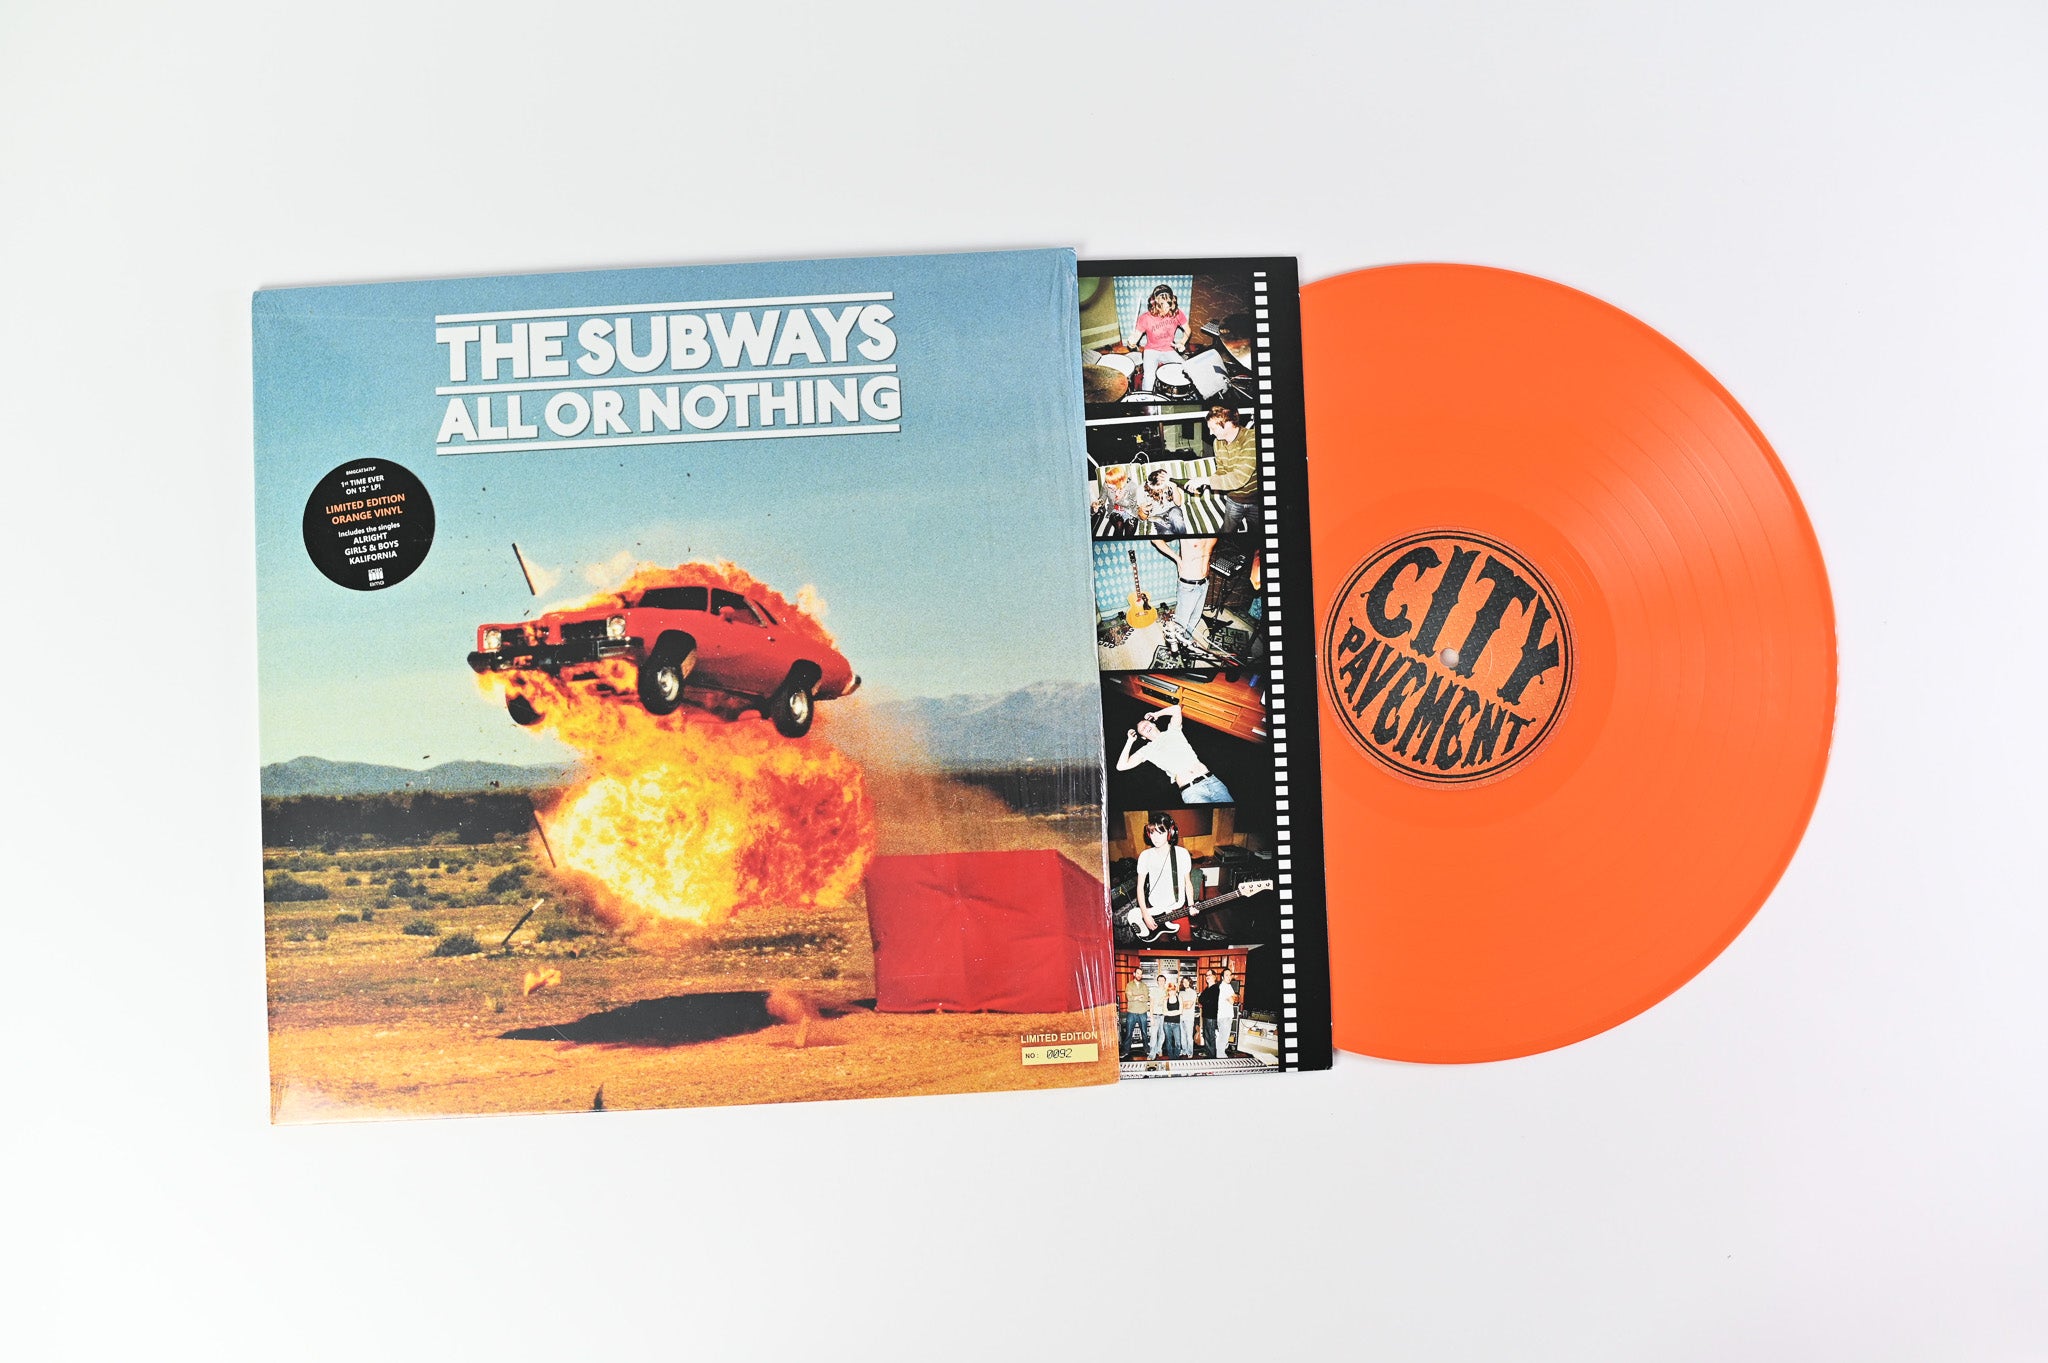 The Subways - All Or Nothing on Echo Label Limited Orange Vinyl